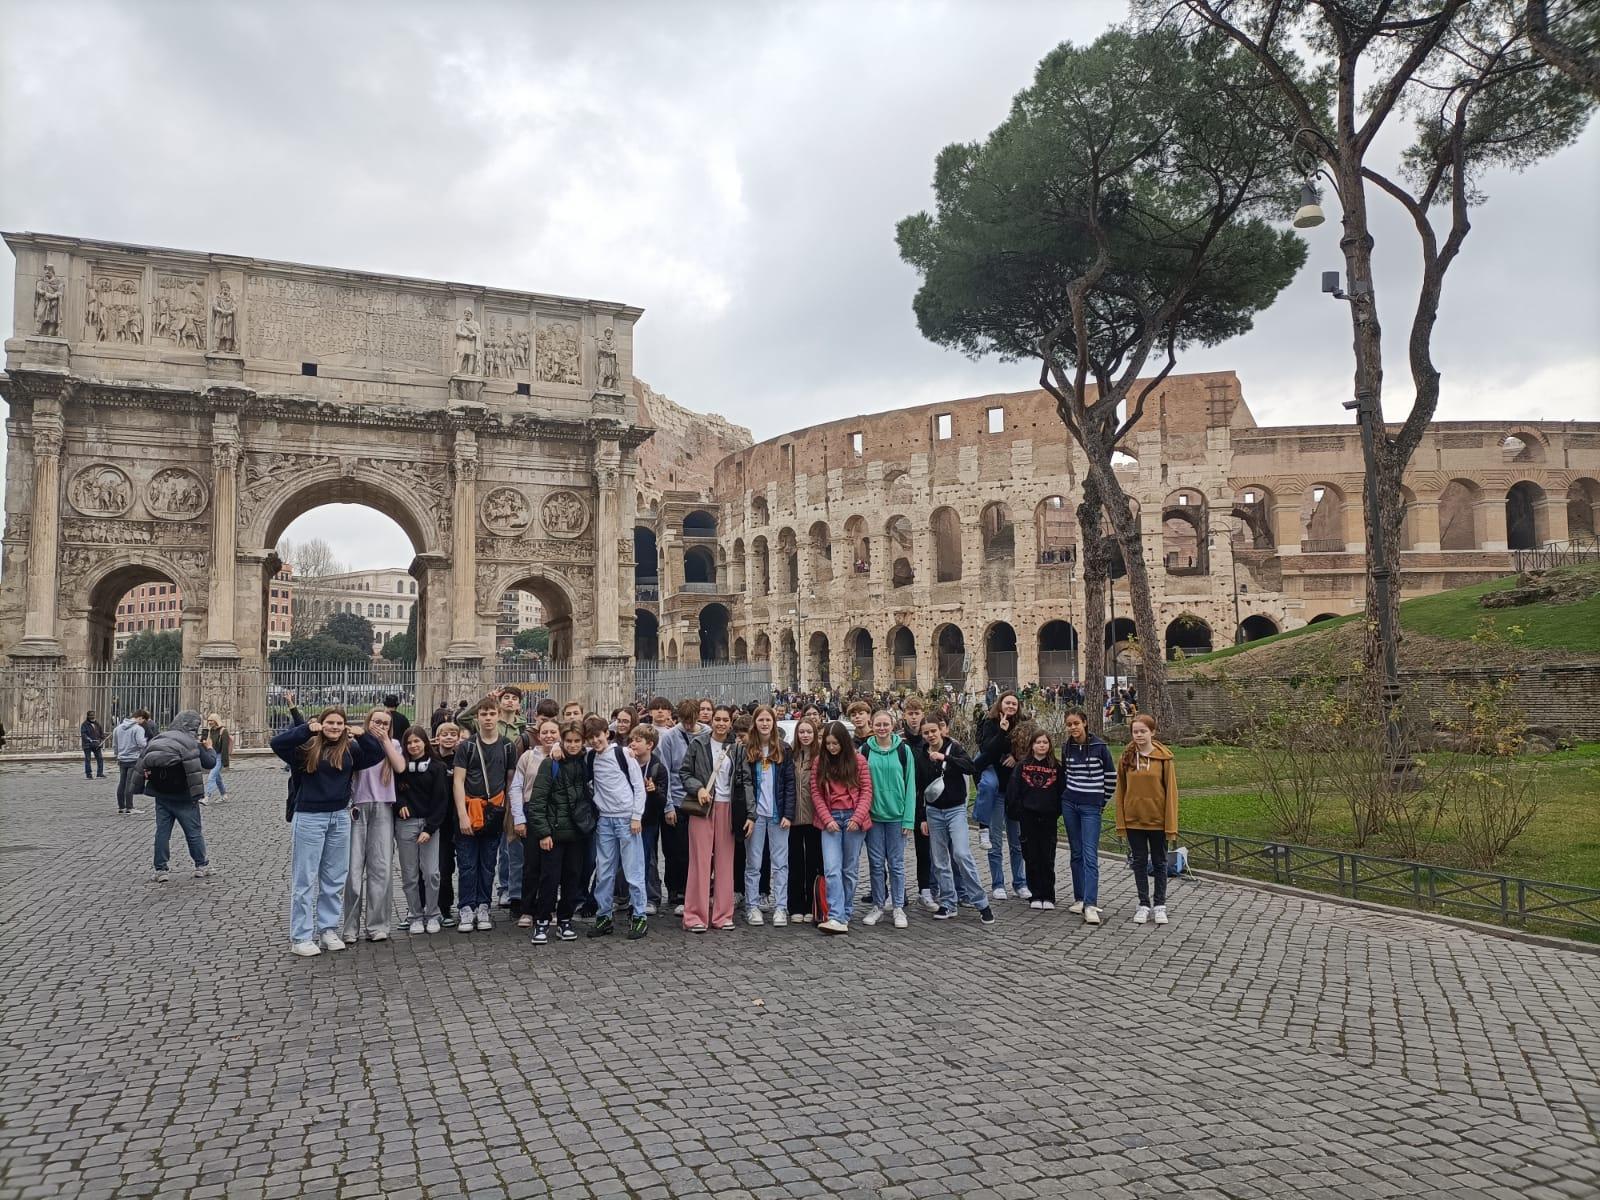 Colosseo 2